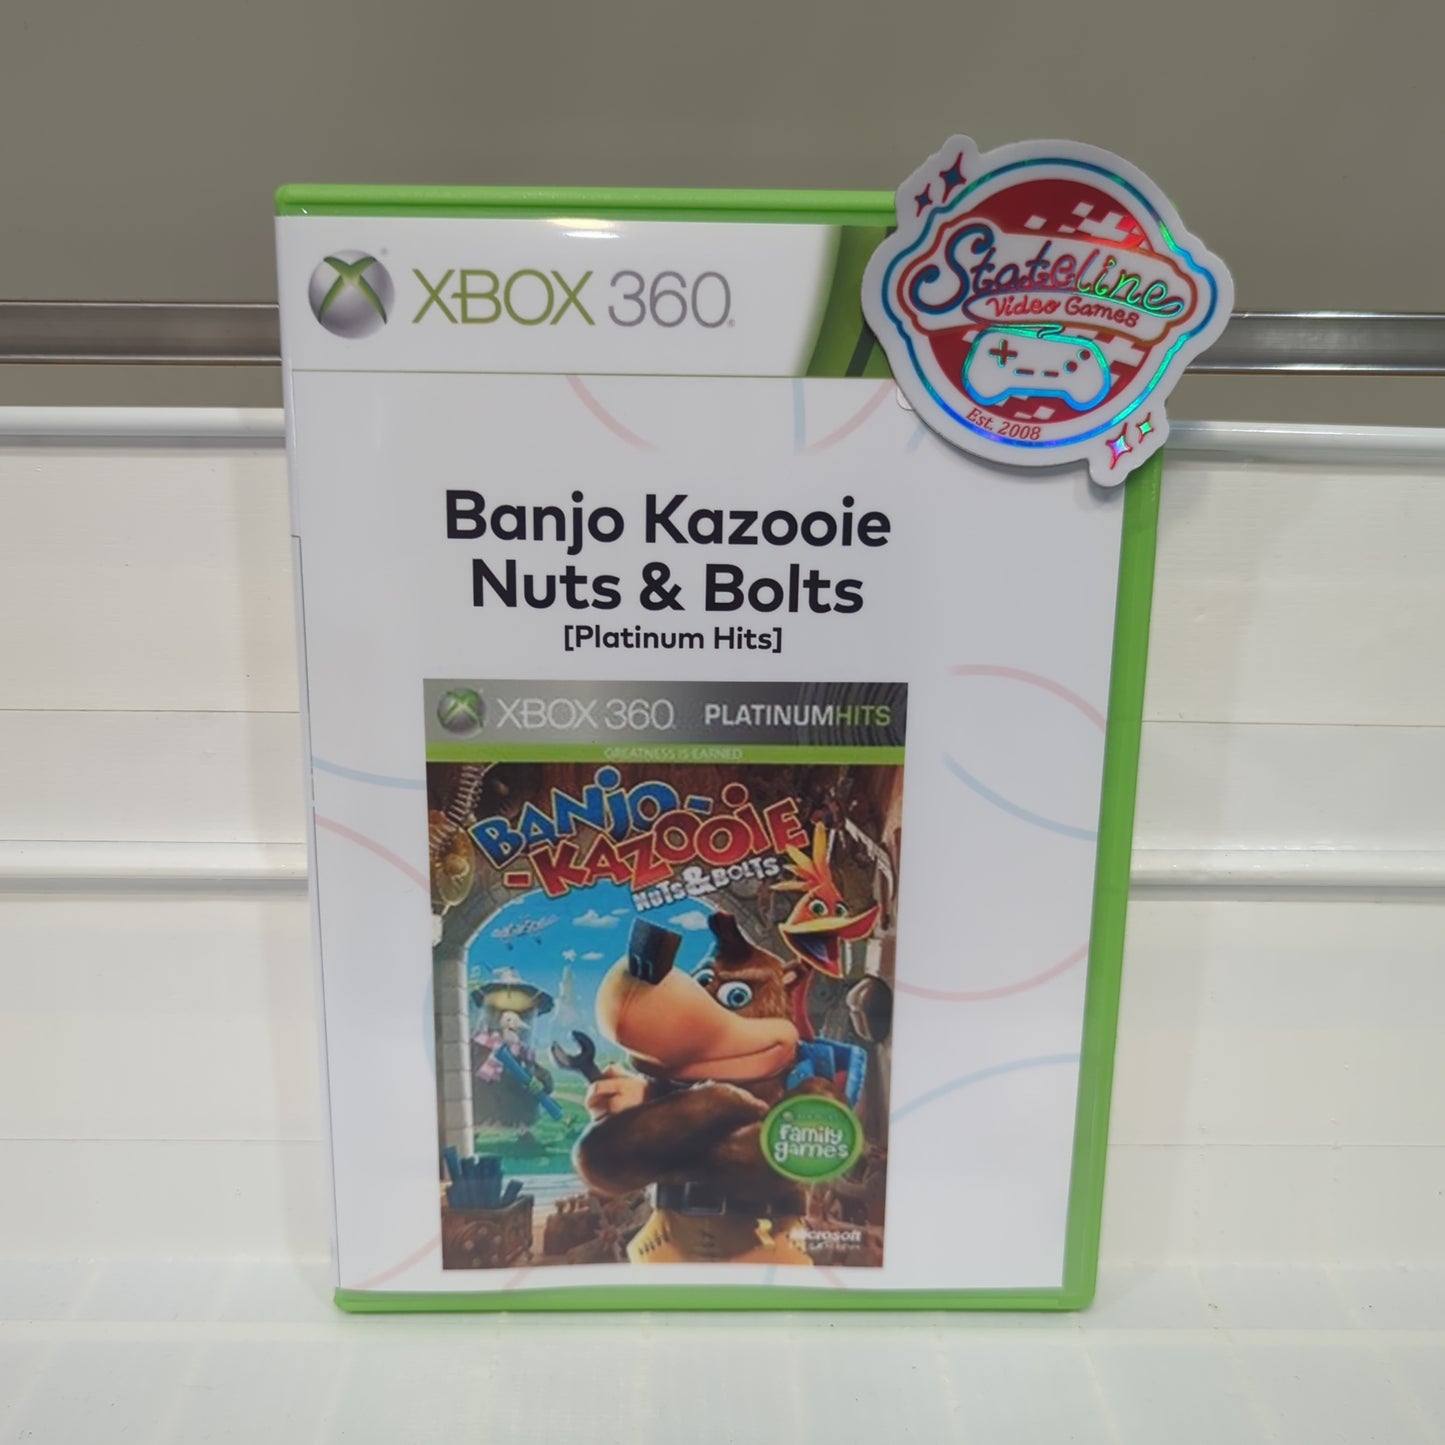 Banjo-Kazooie Nuts & Bolts - Xbox 360